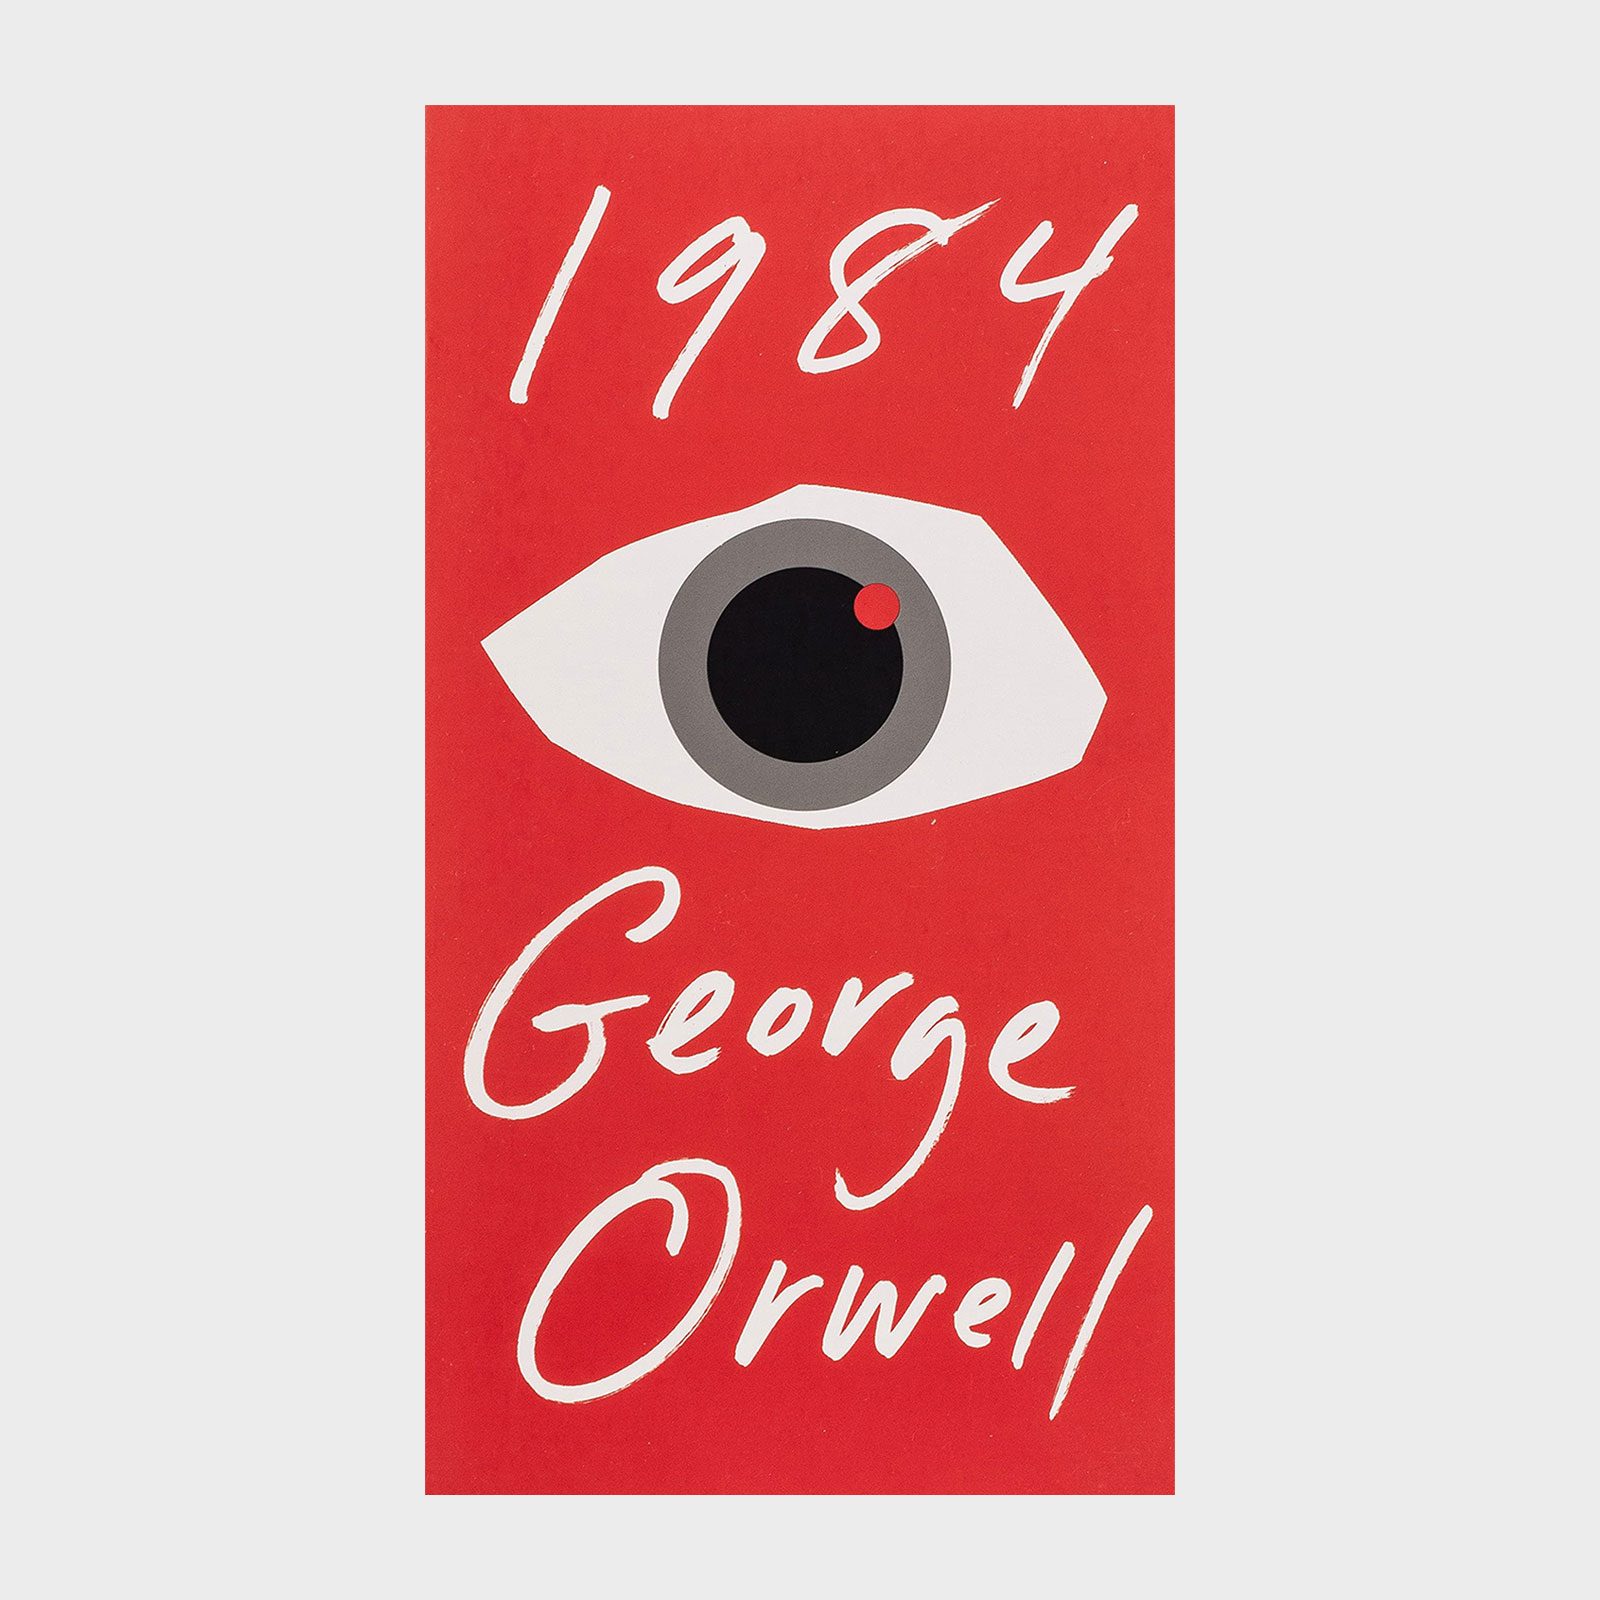 1984 Orwell 